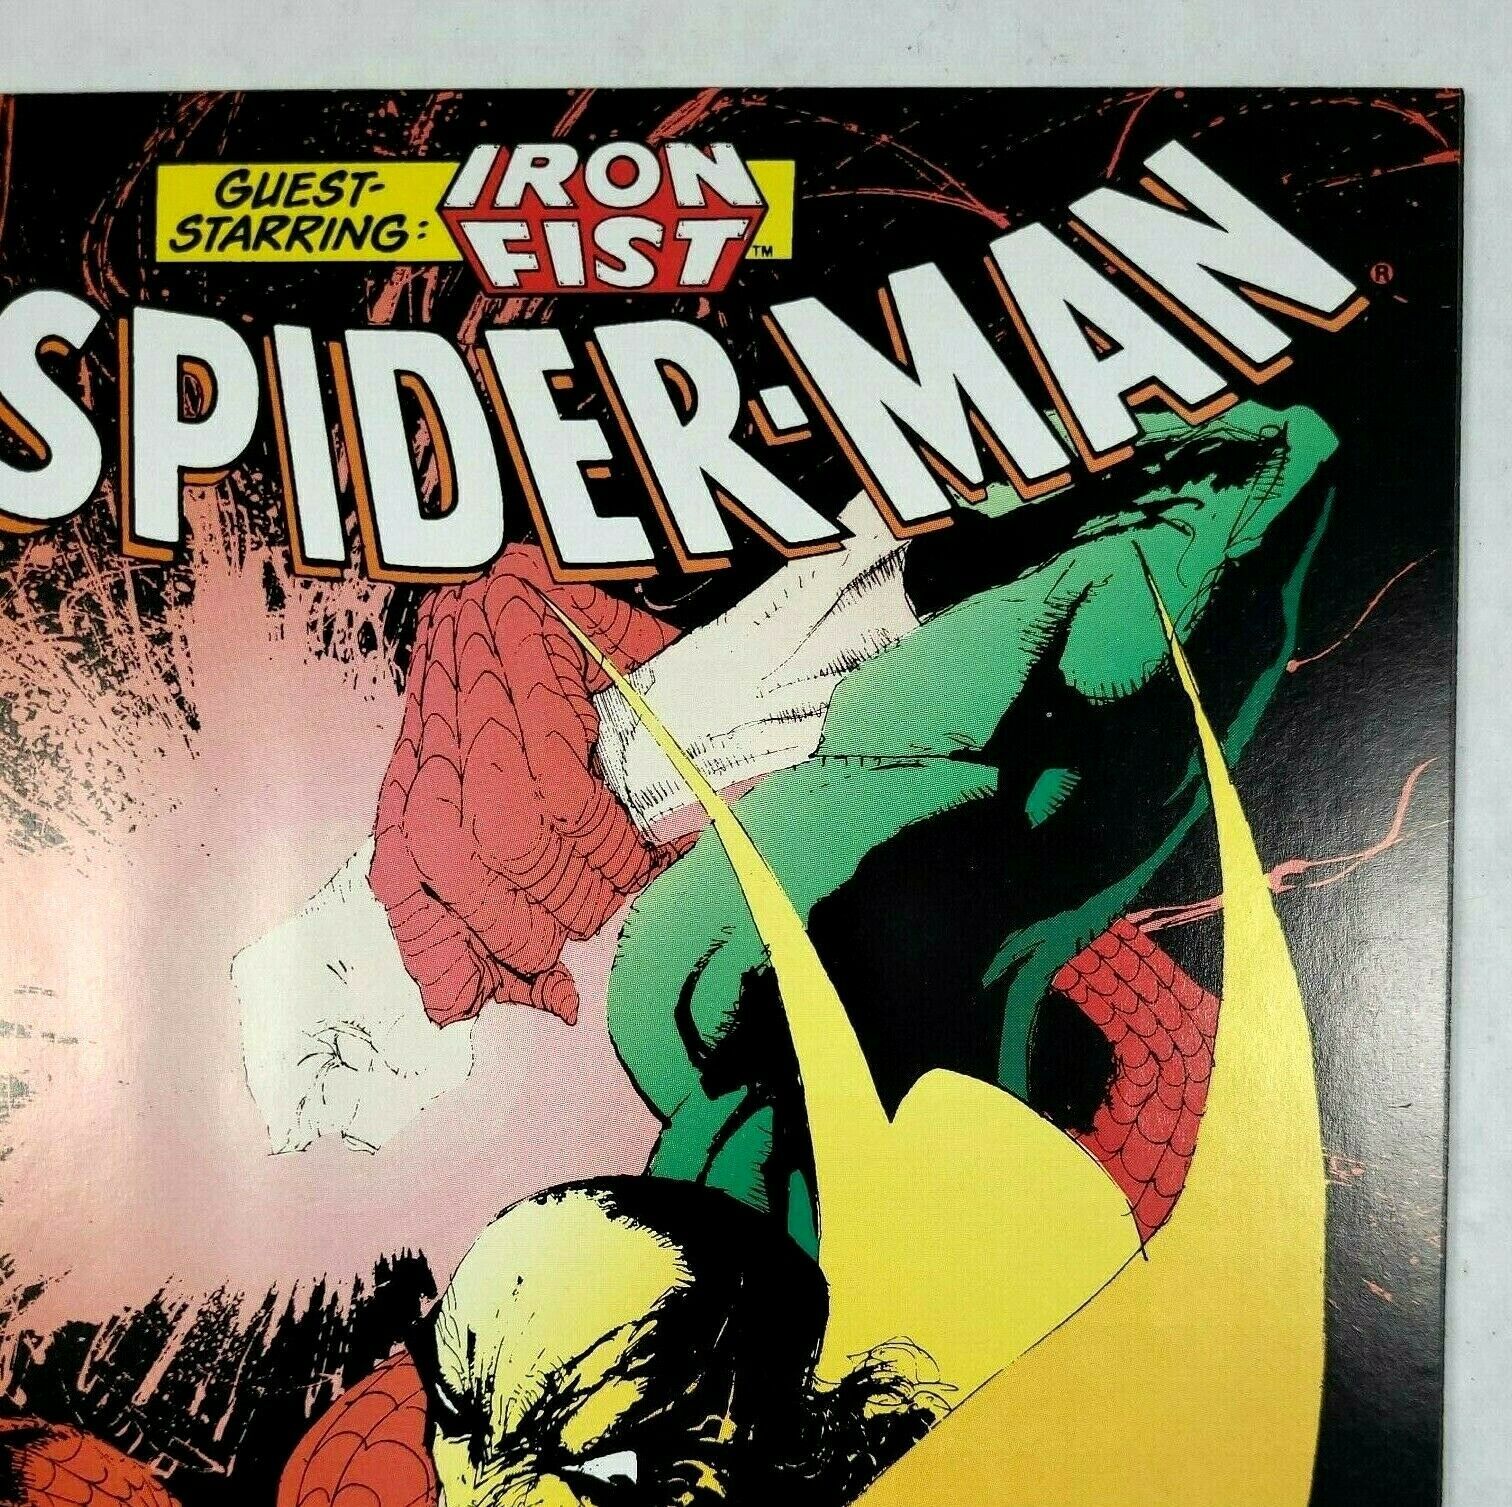 USA, 1993 Jae Lee, guest: Iron Fist Spiderman # 41